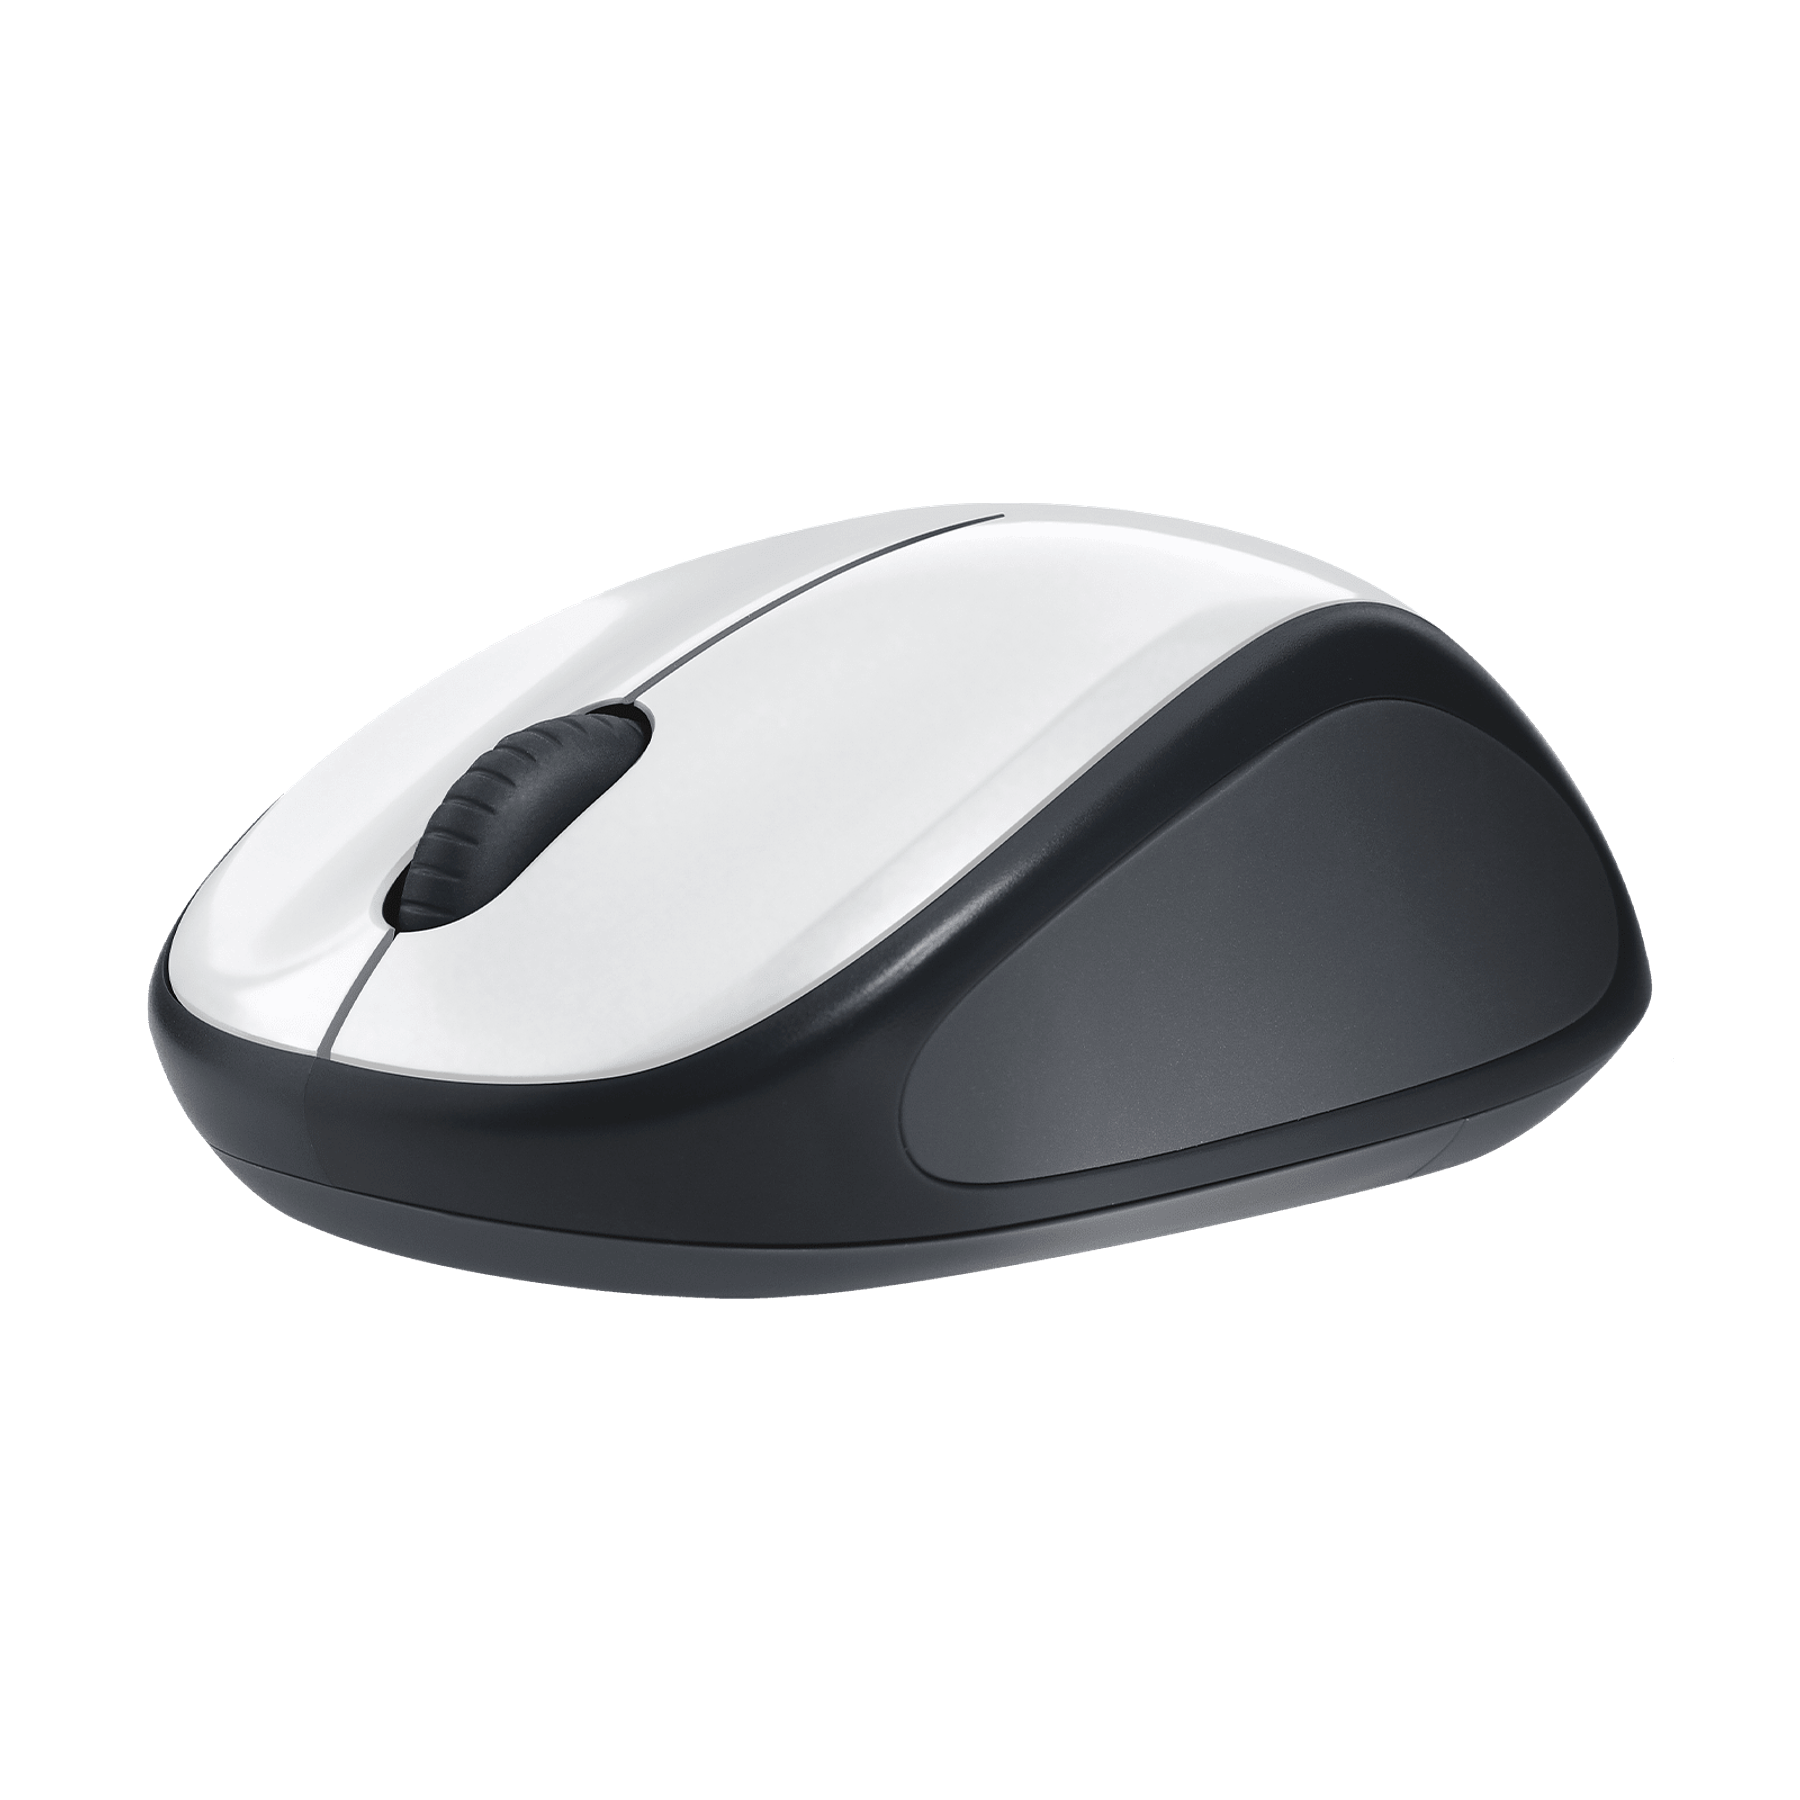 Logitech M317c Wireless Mouse 